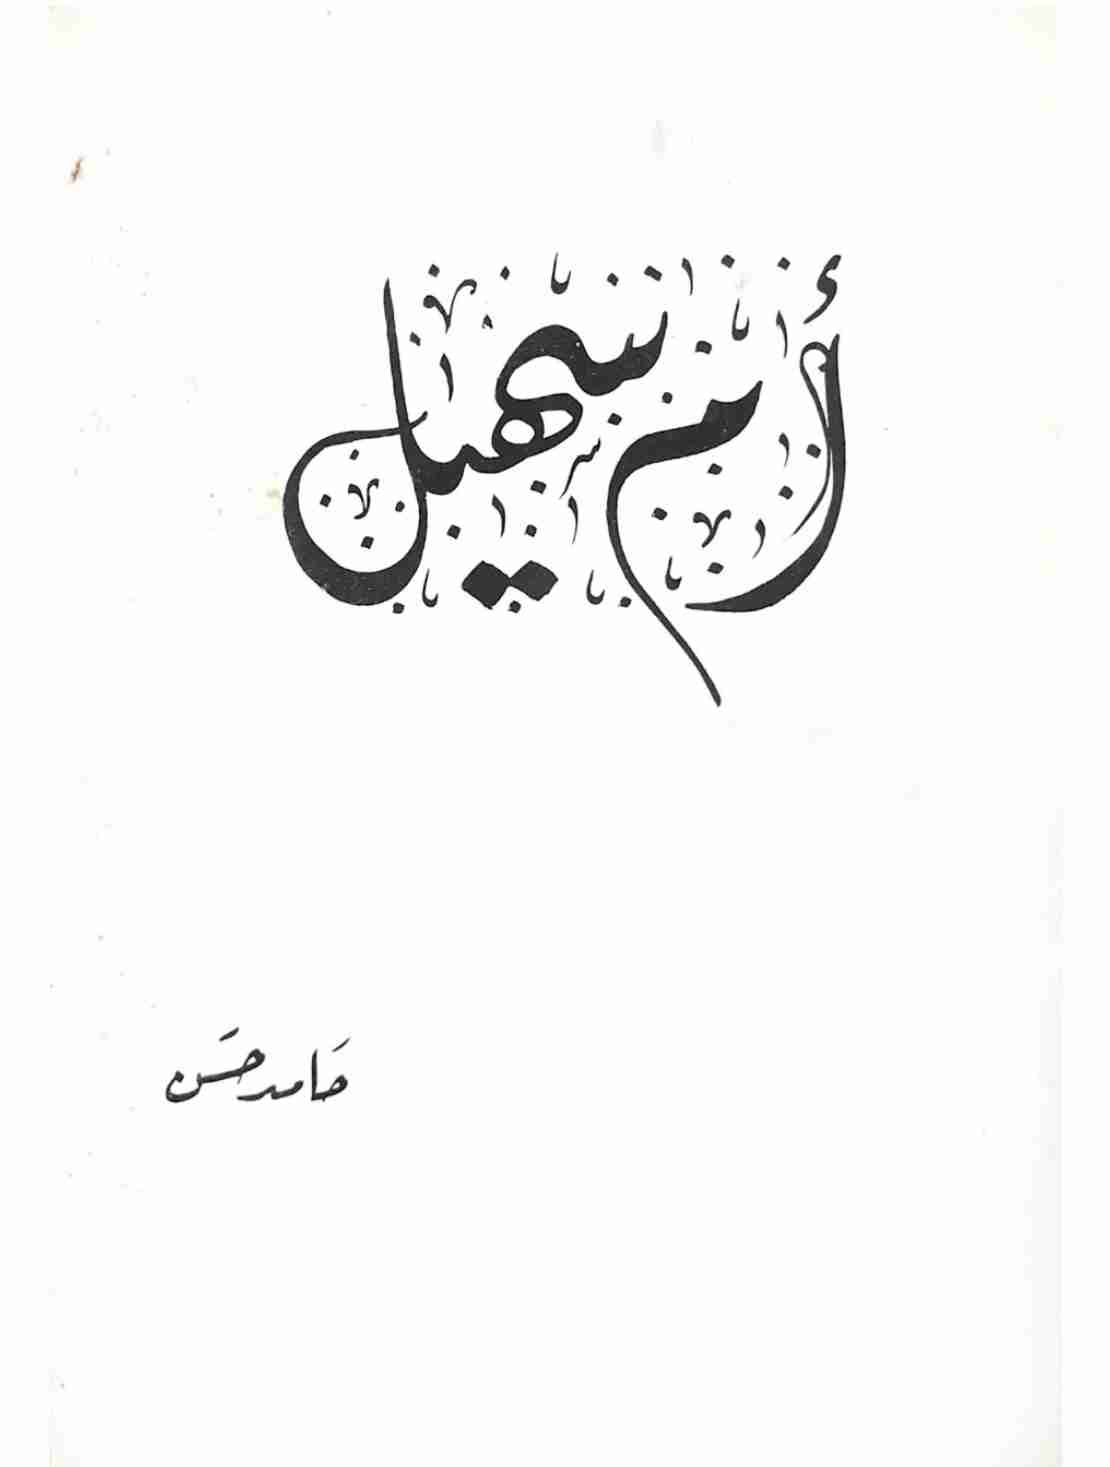 كتاب ام سهيل لـ حامد حسن معروف